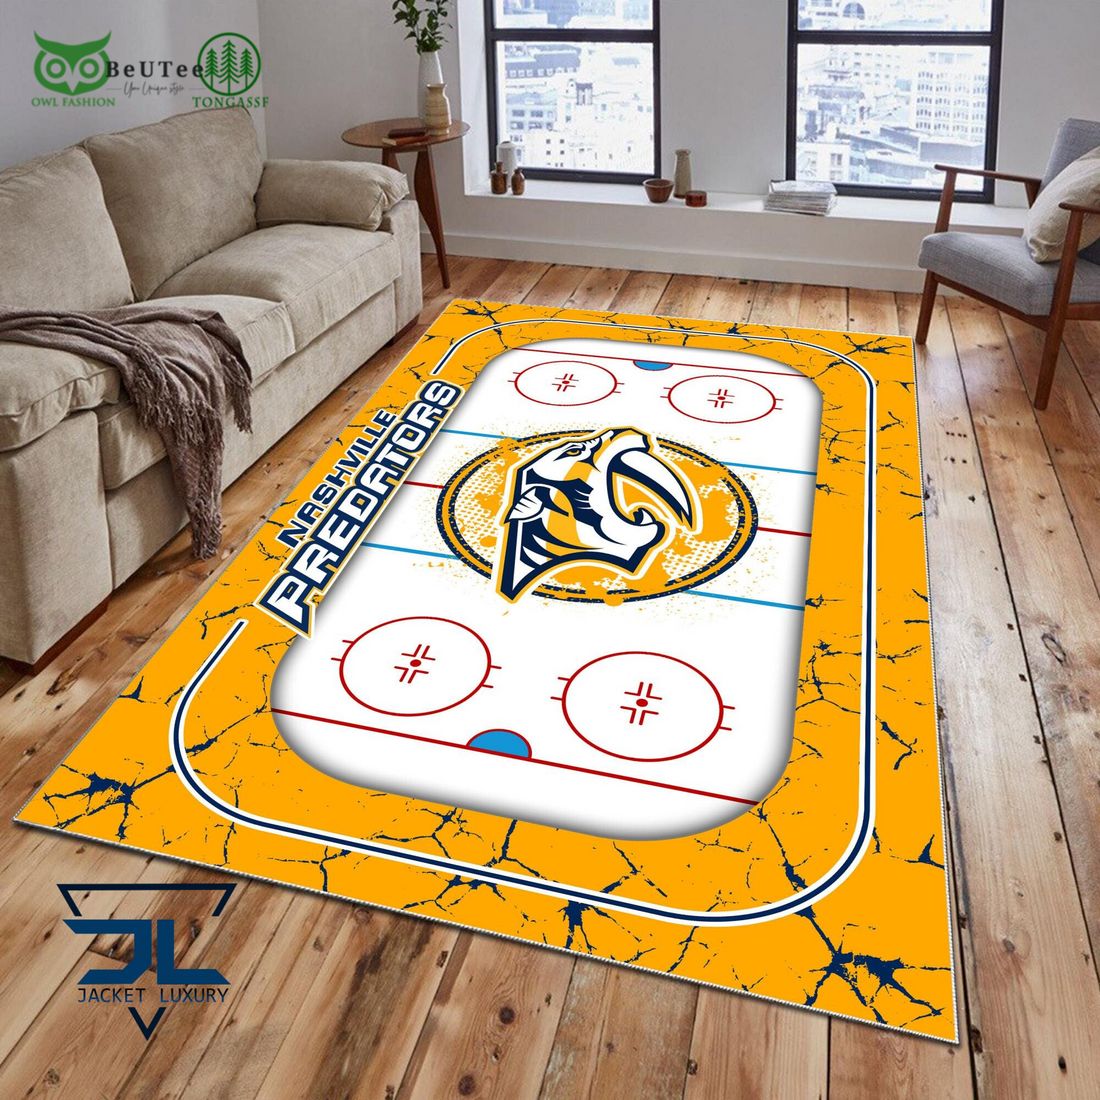 nashville predators nhl hockey team carpet rug 1 2zoOD